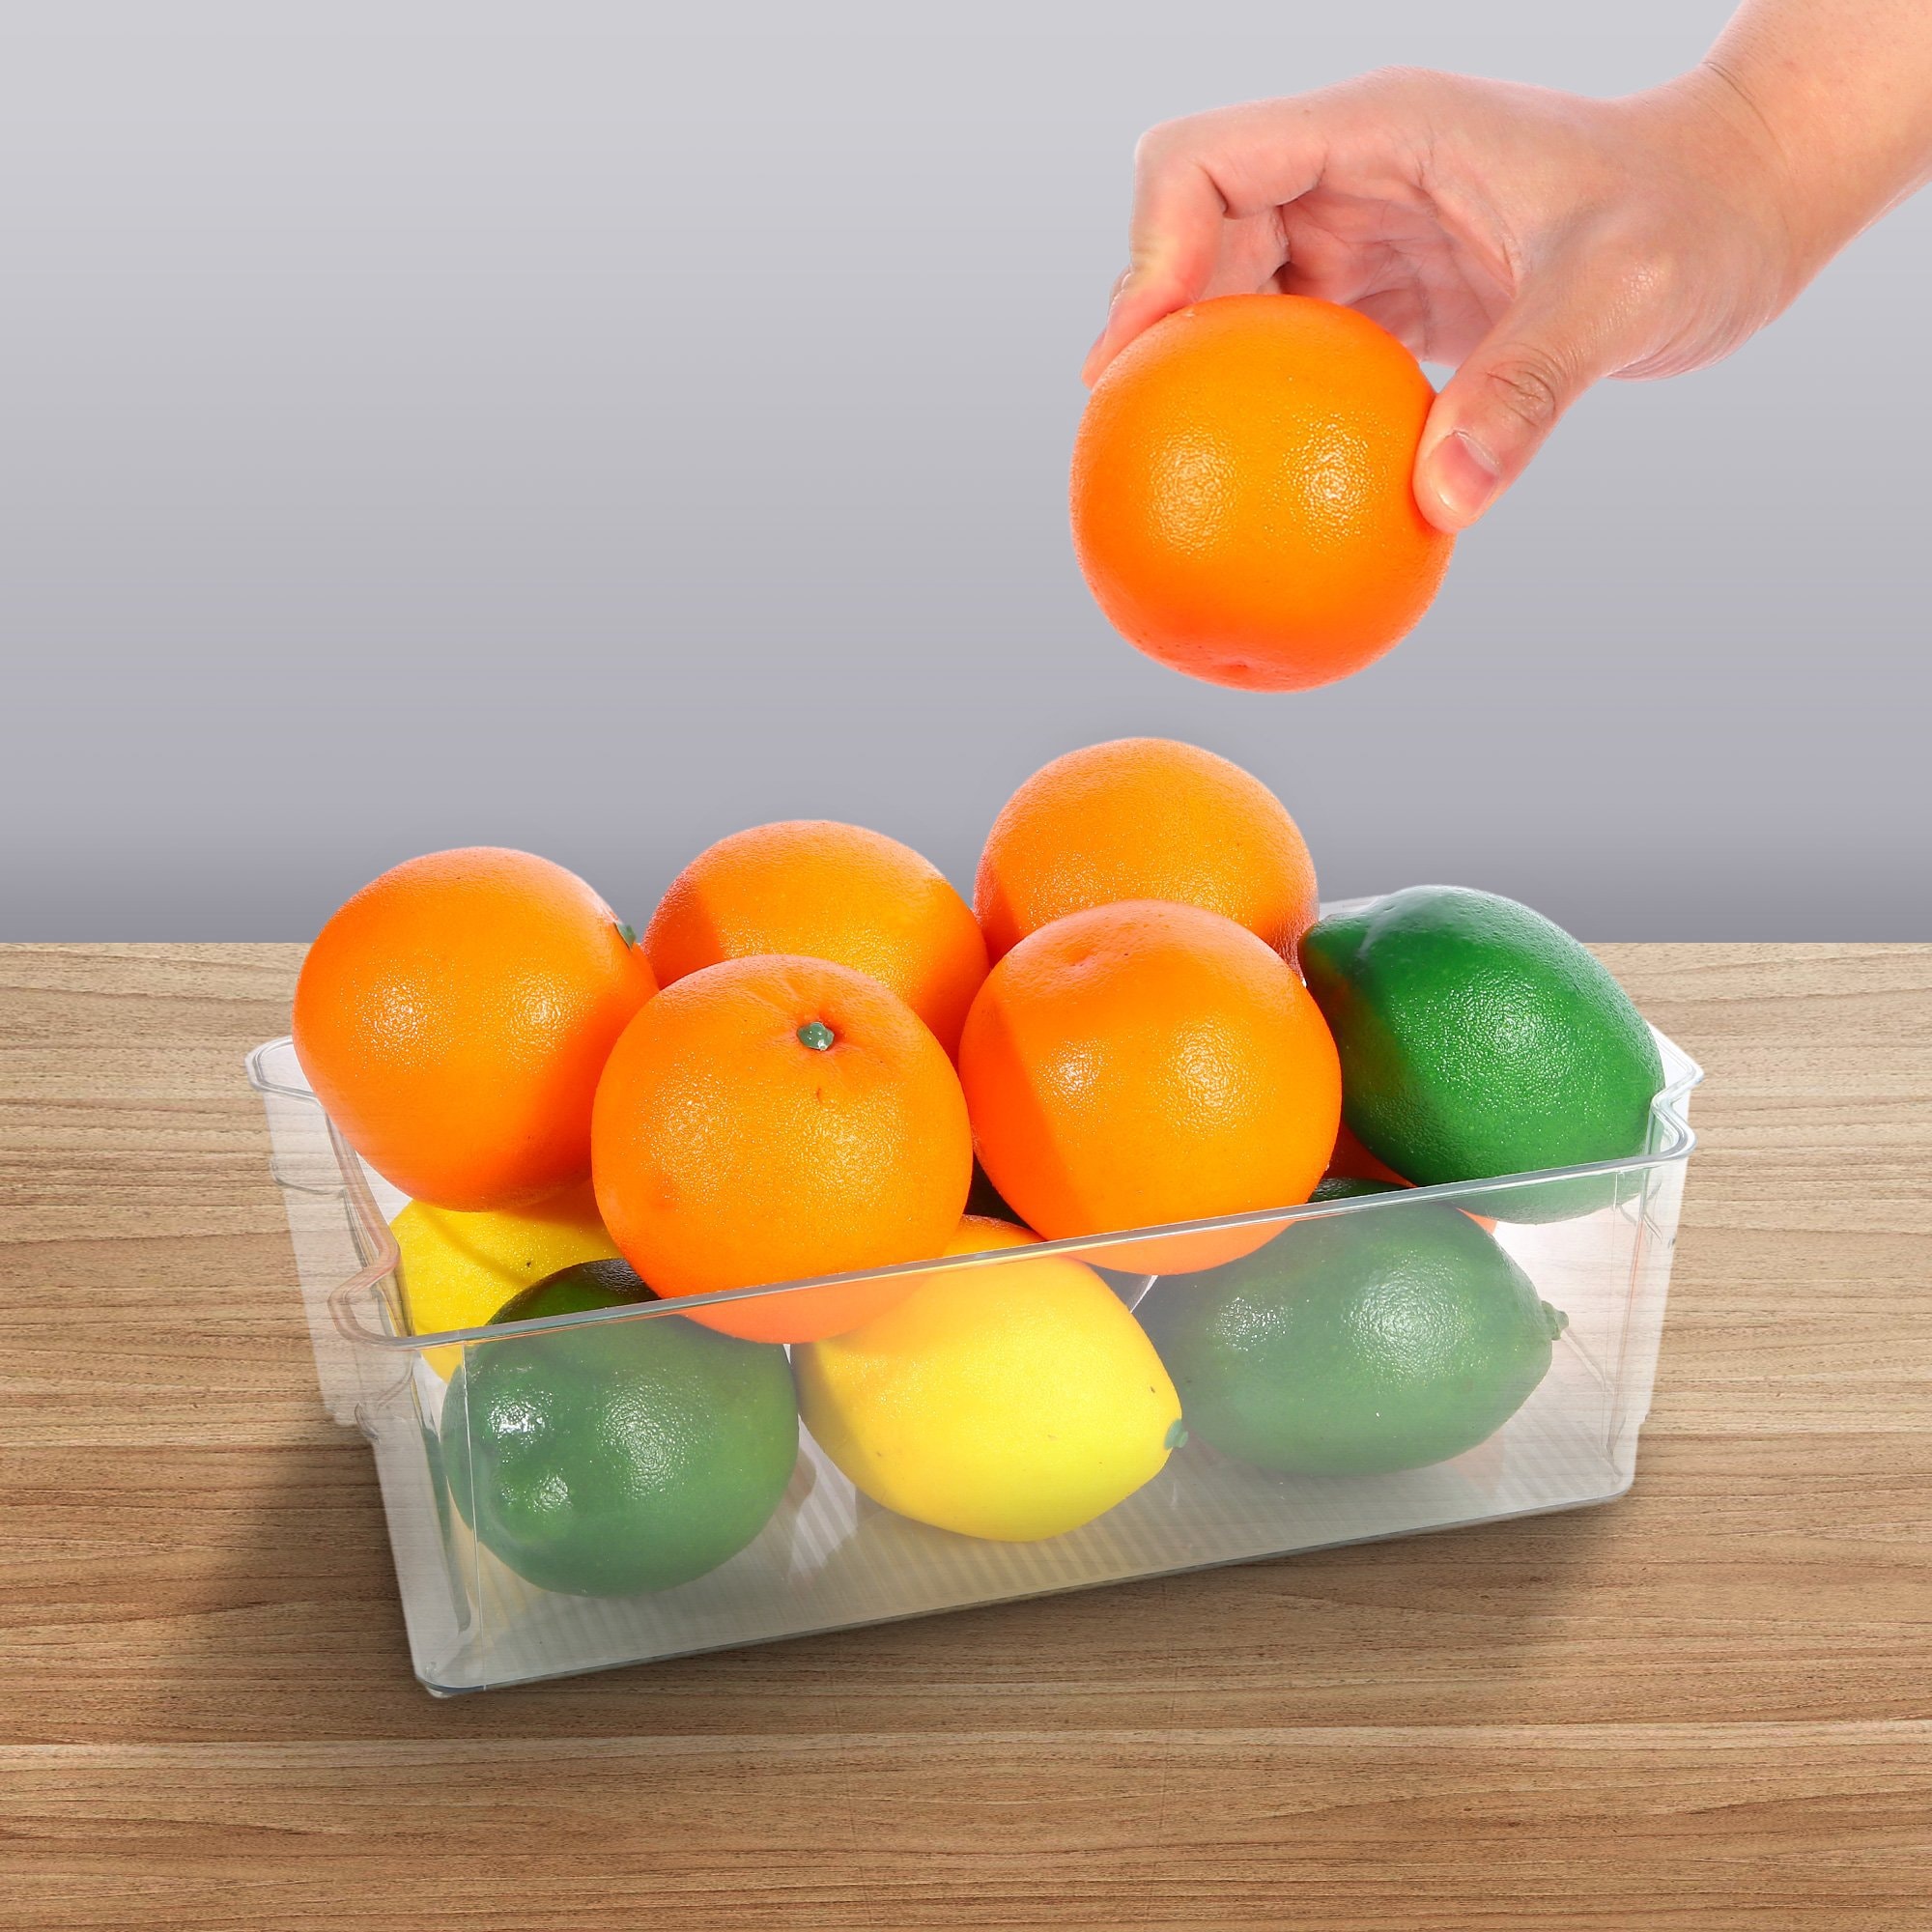 ROSELIFE 饮品蔬菜水果分类厨房冰箱收纳盒 11.8"x6.3"x3.5" 2个装